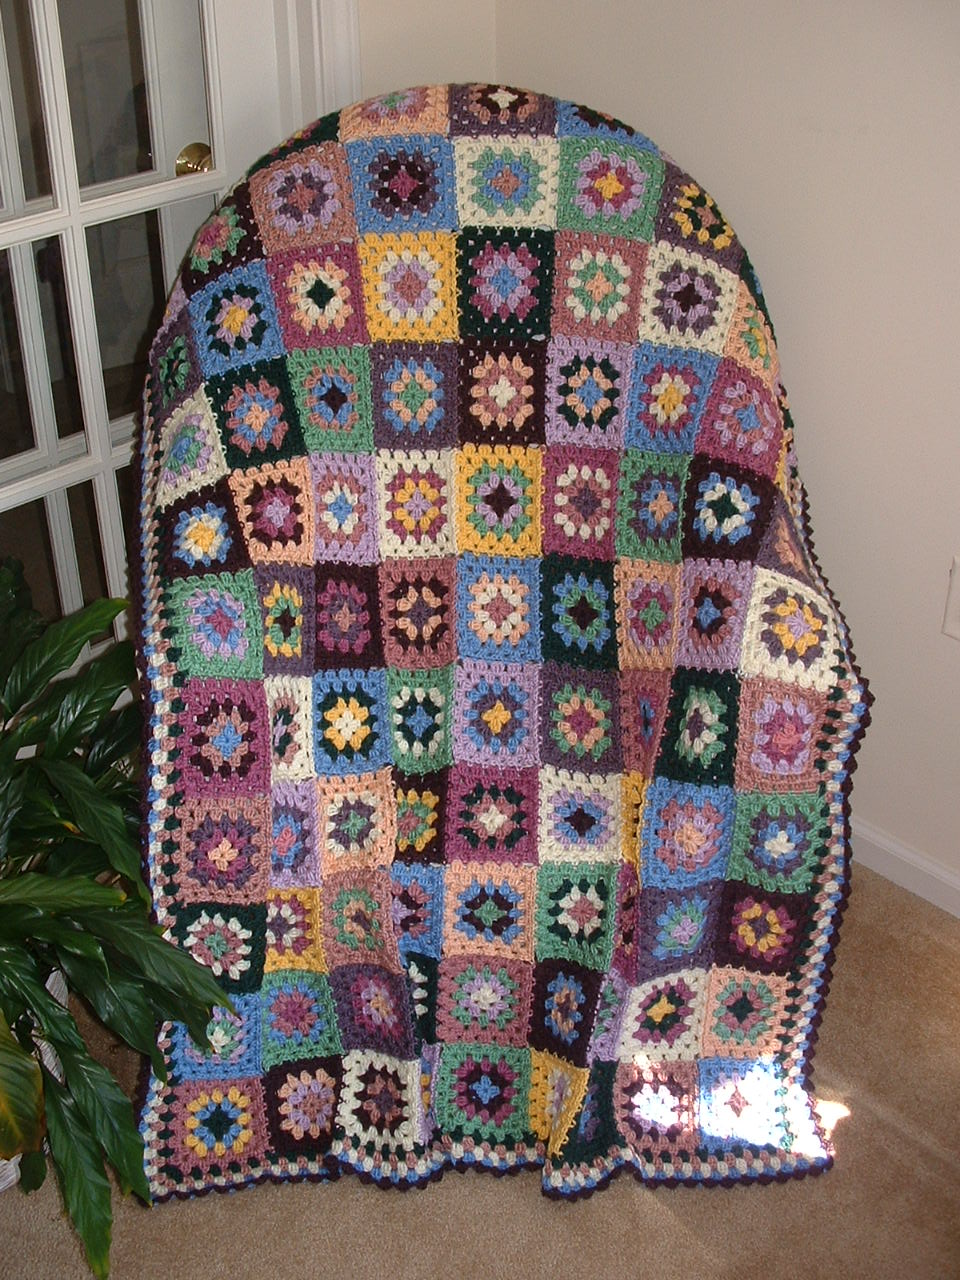 Six Inch Afghan Square Crochet Pattern - Free crochet patterns